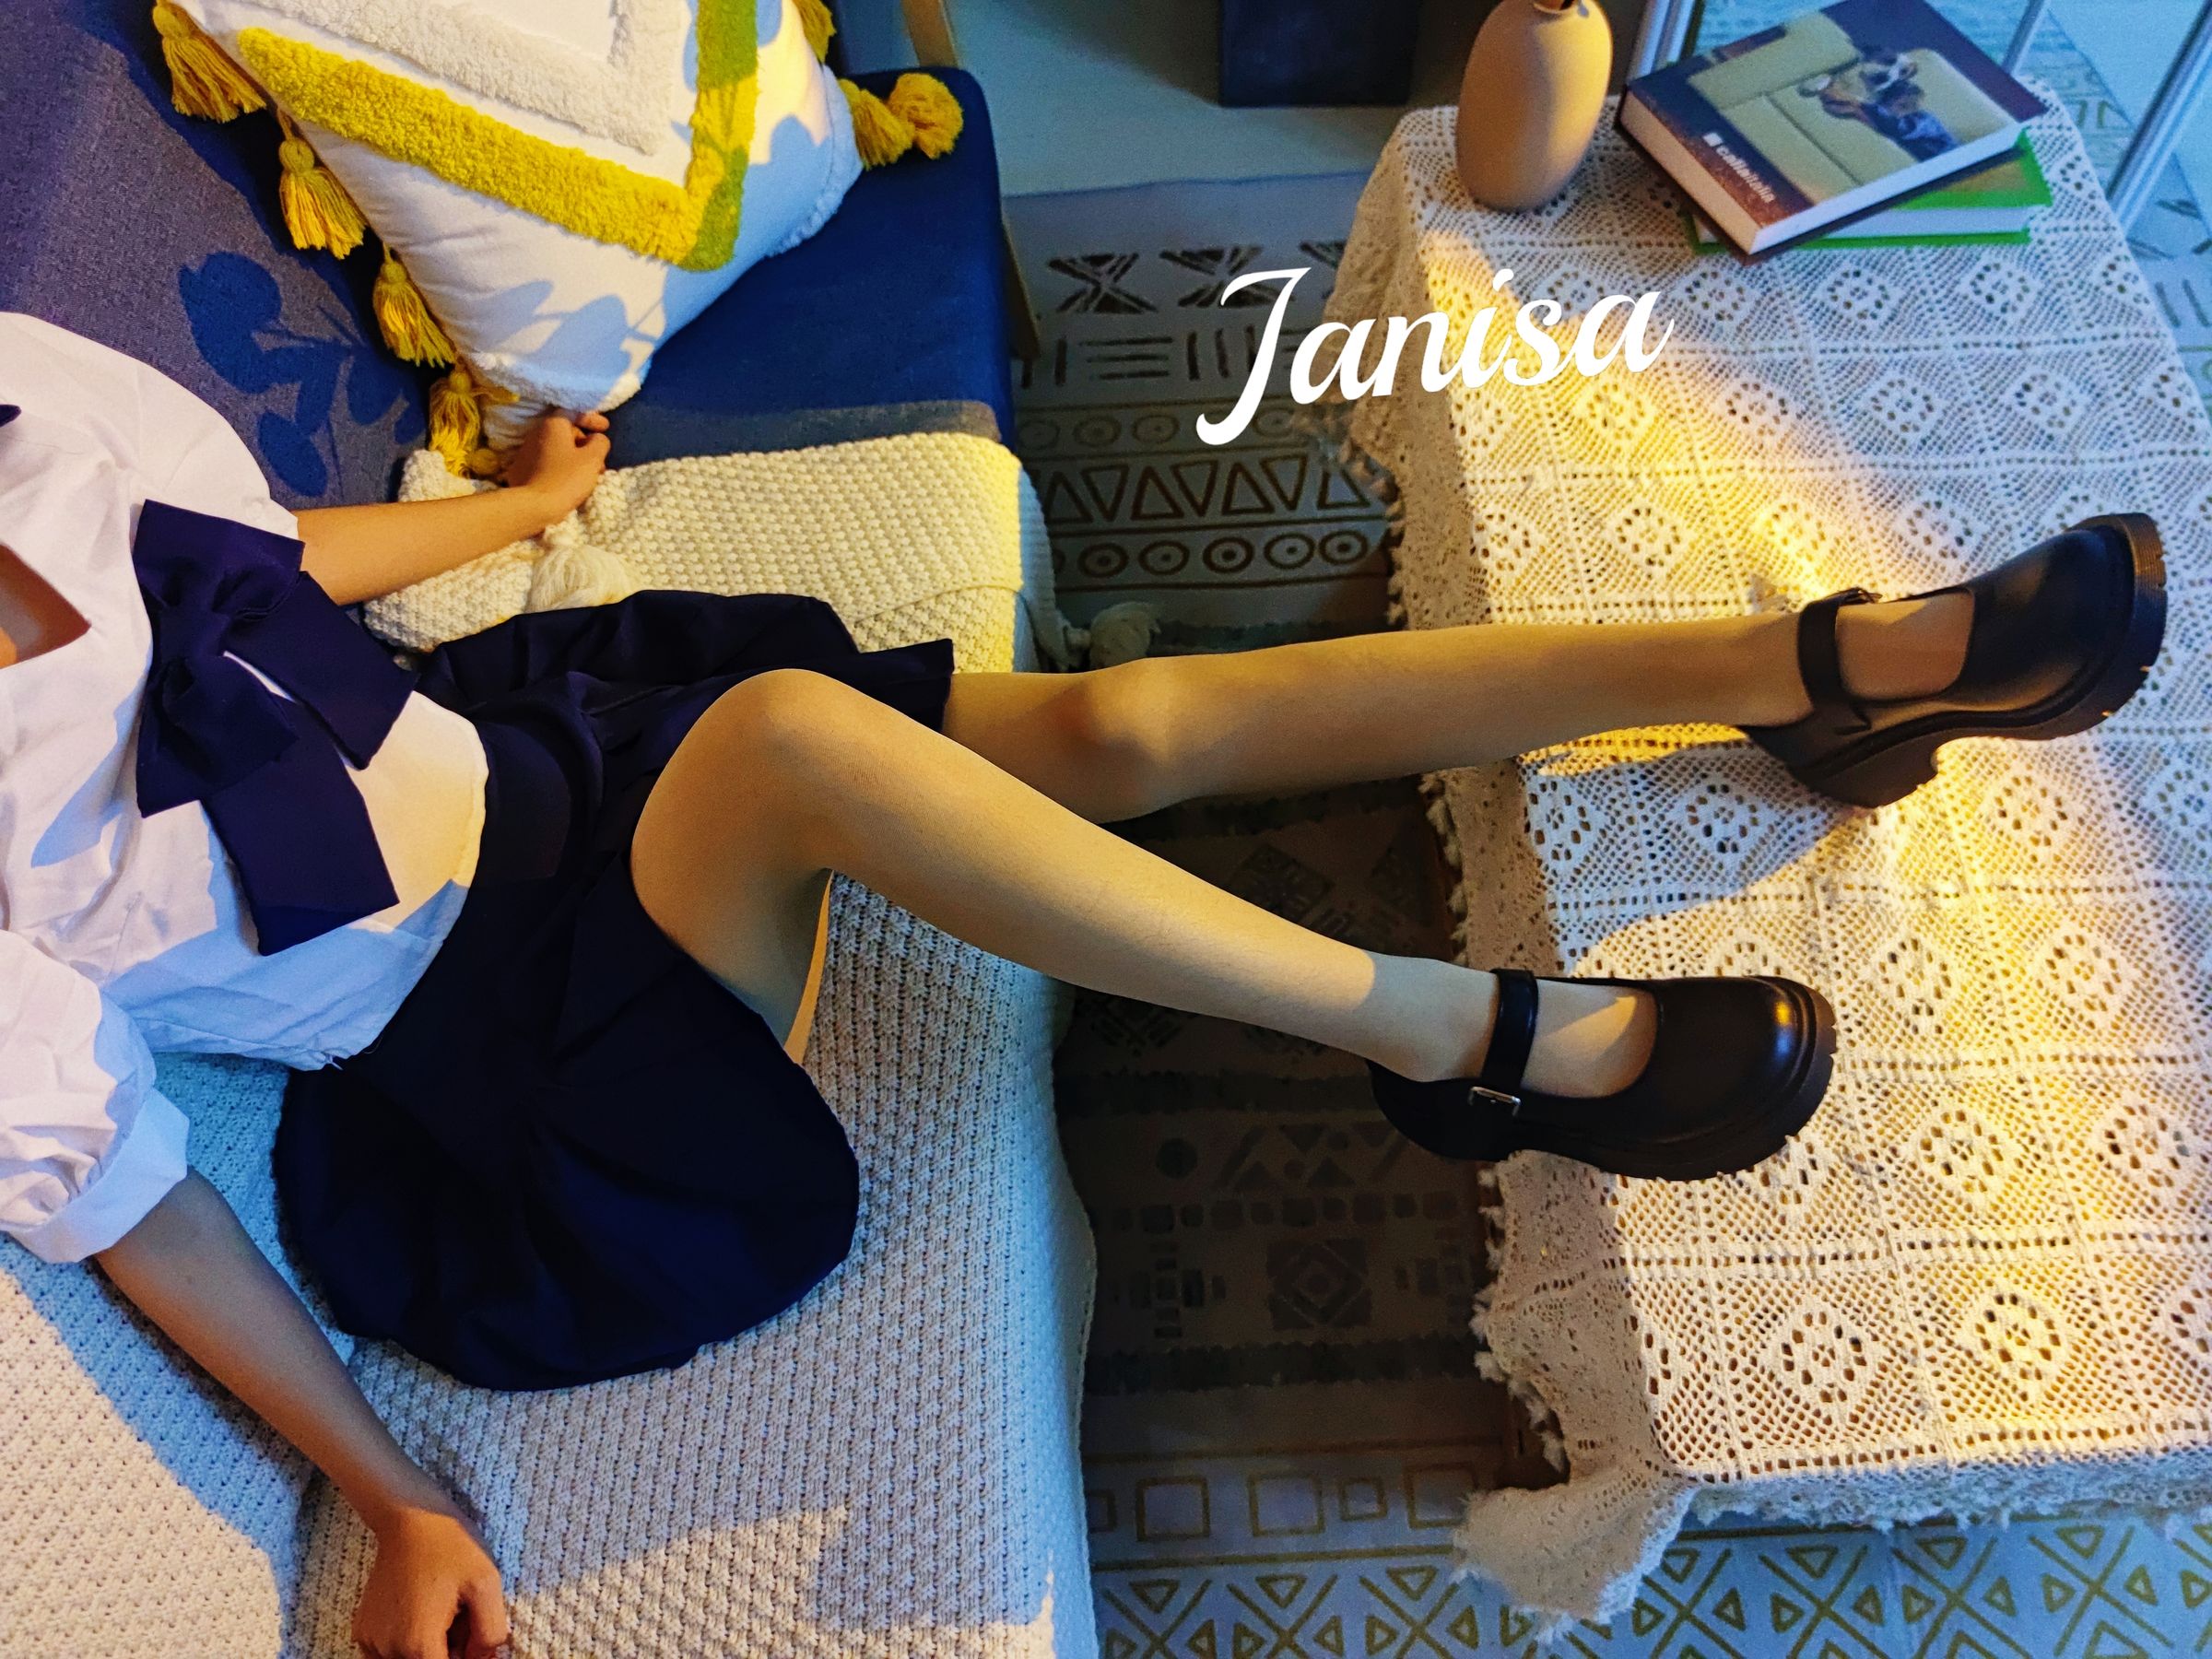 Janisa - 落日余晖 